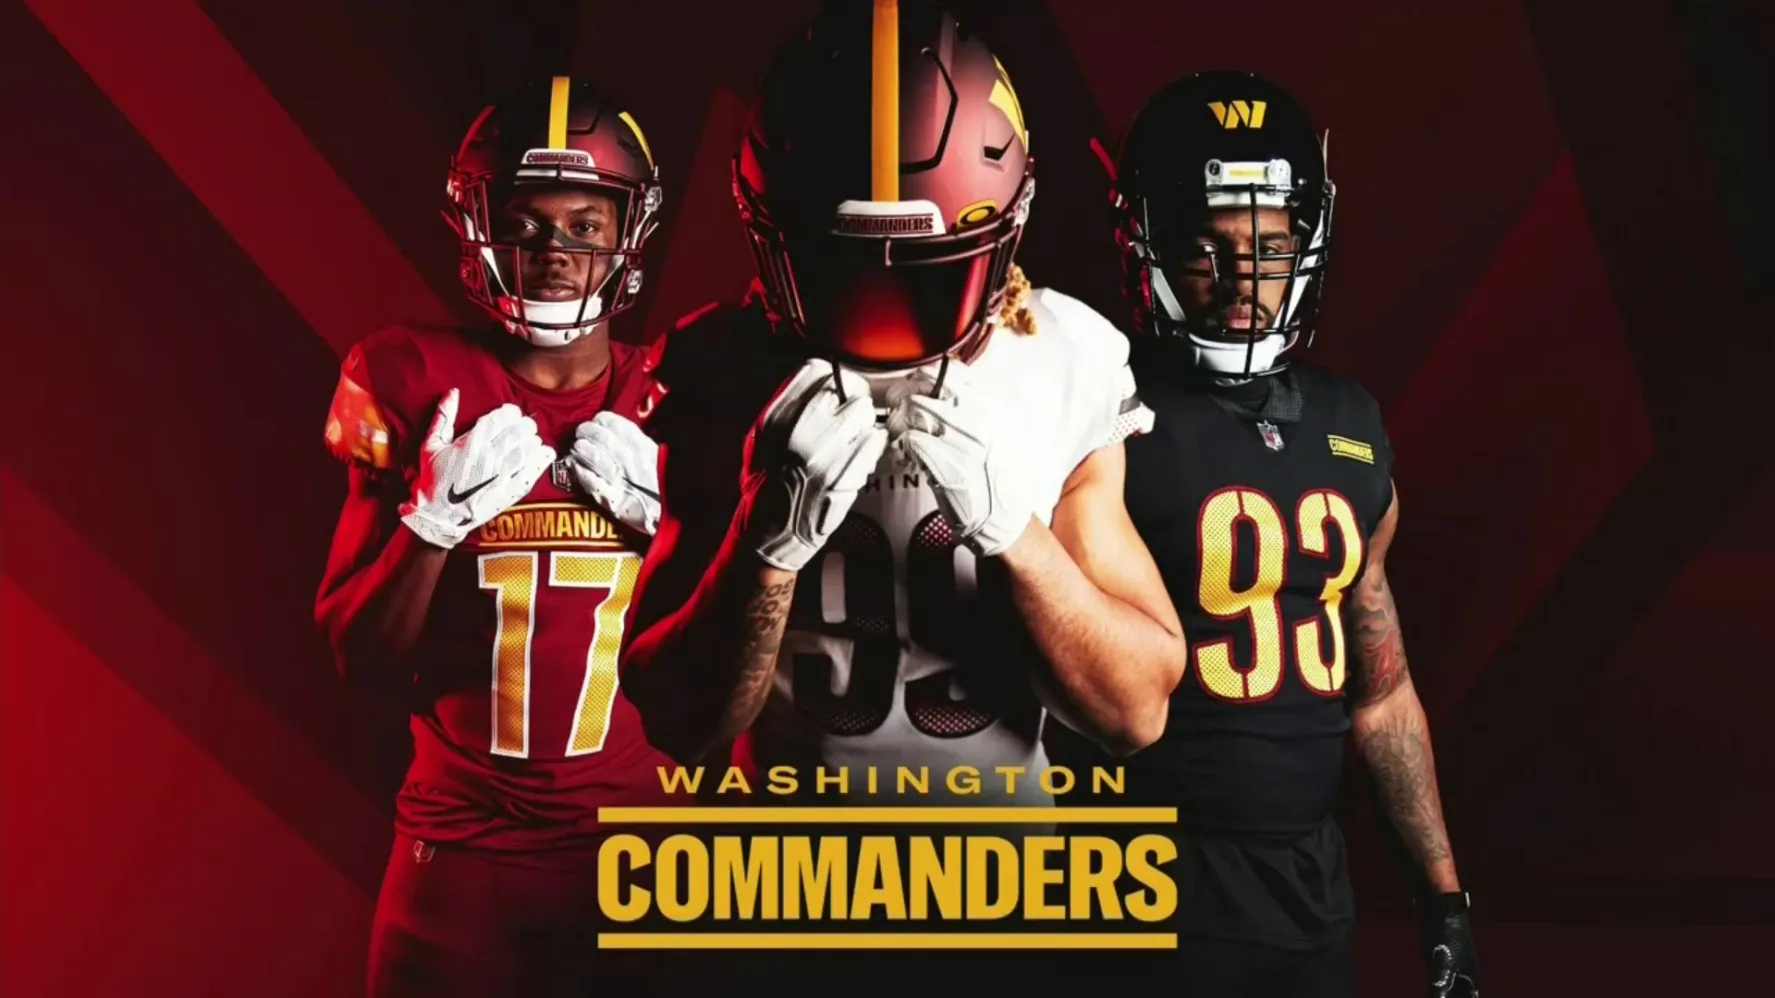 Photos See the Washington Commanders’ New Uniforms, Logo – NBC4 Washington